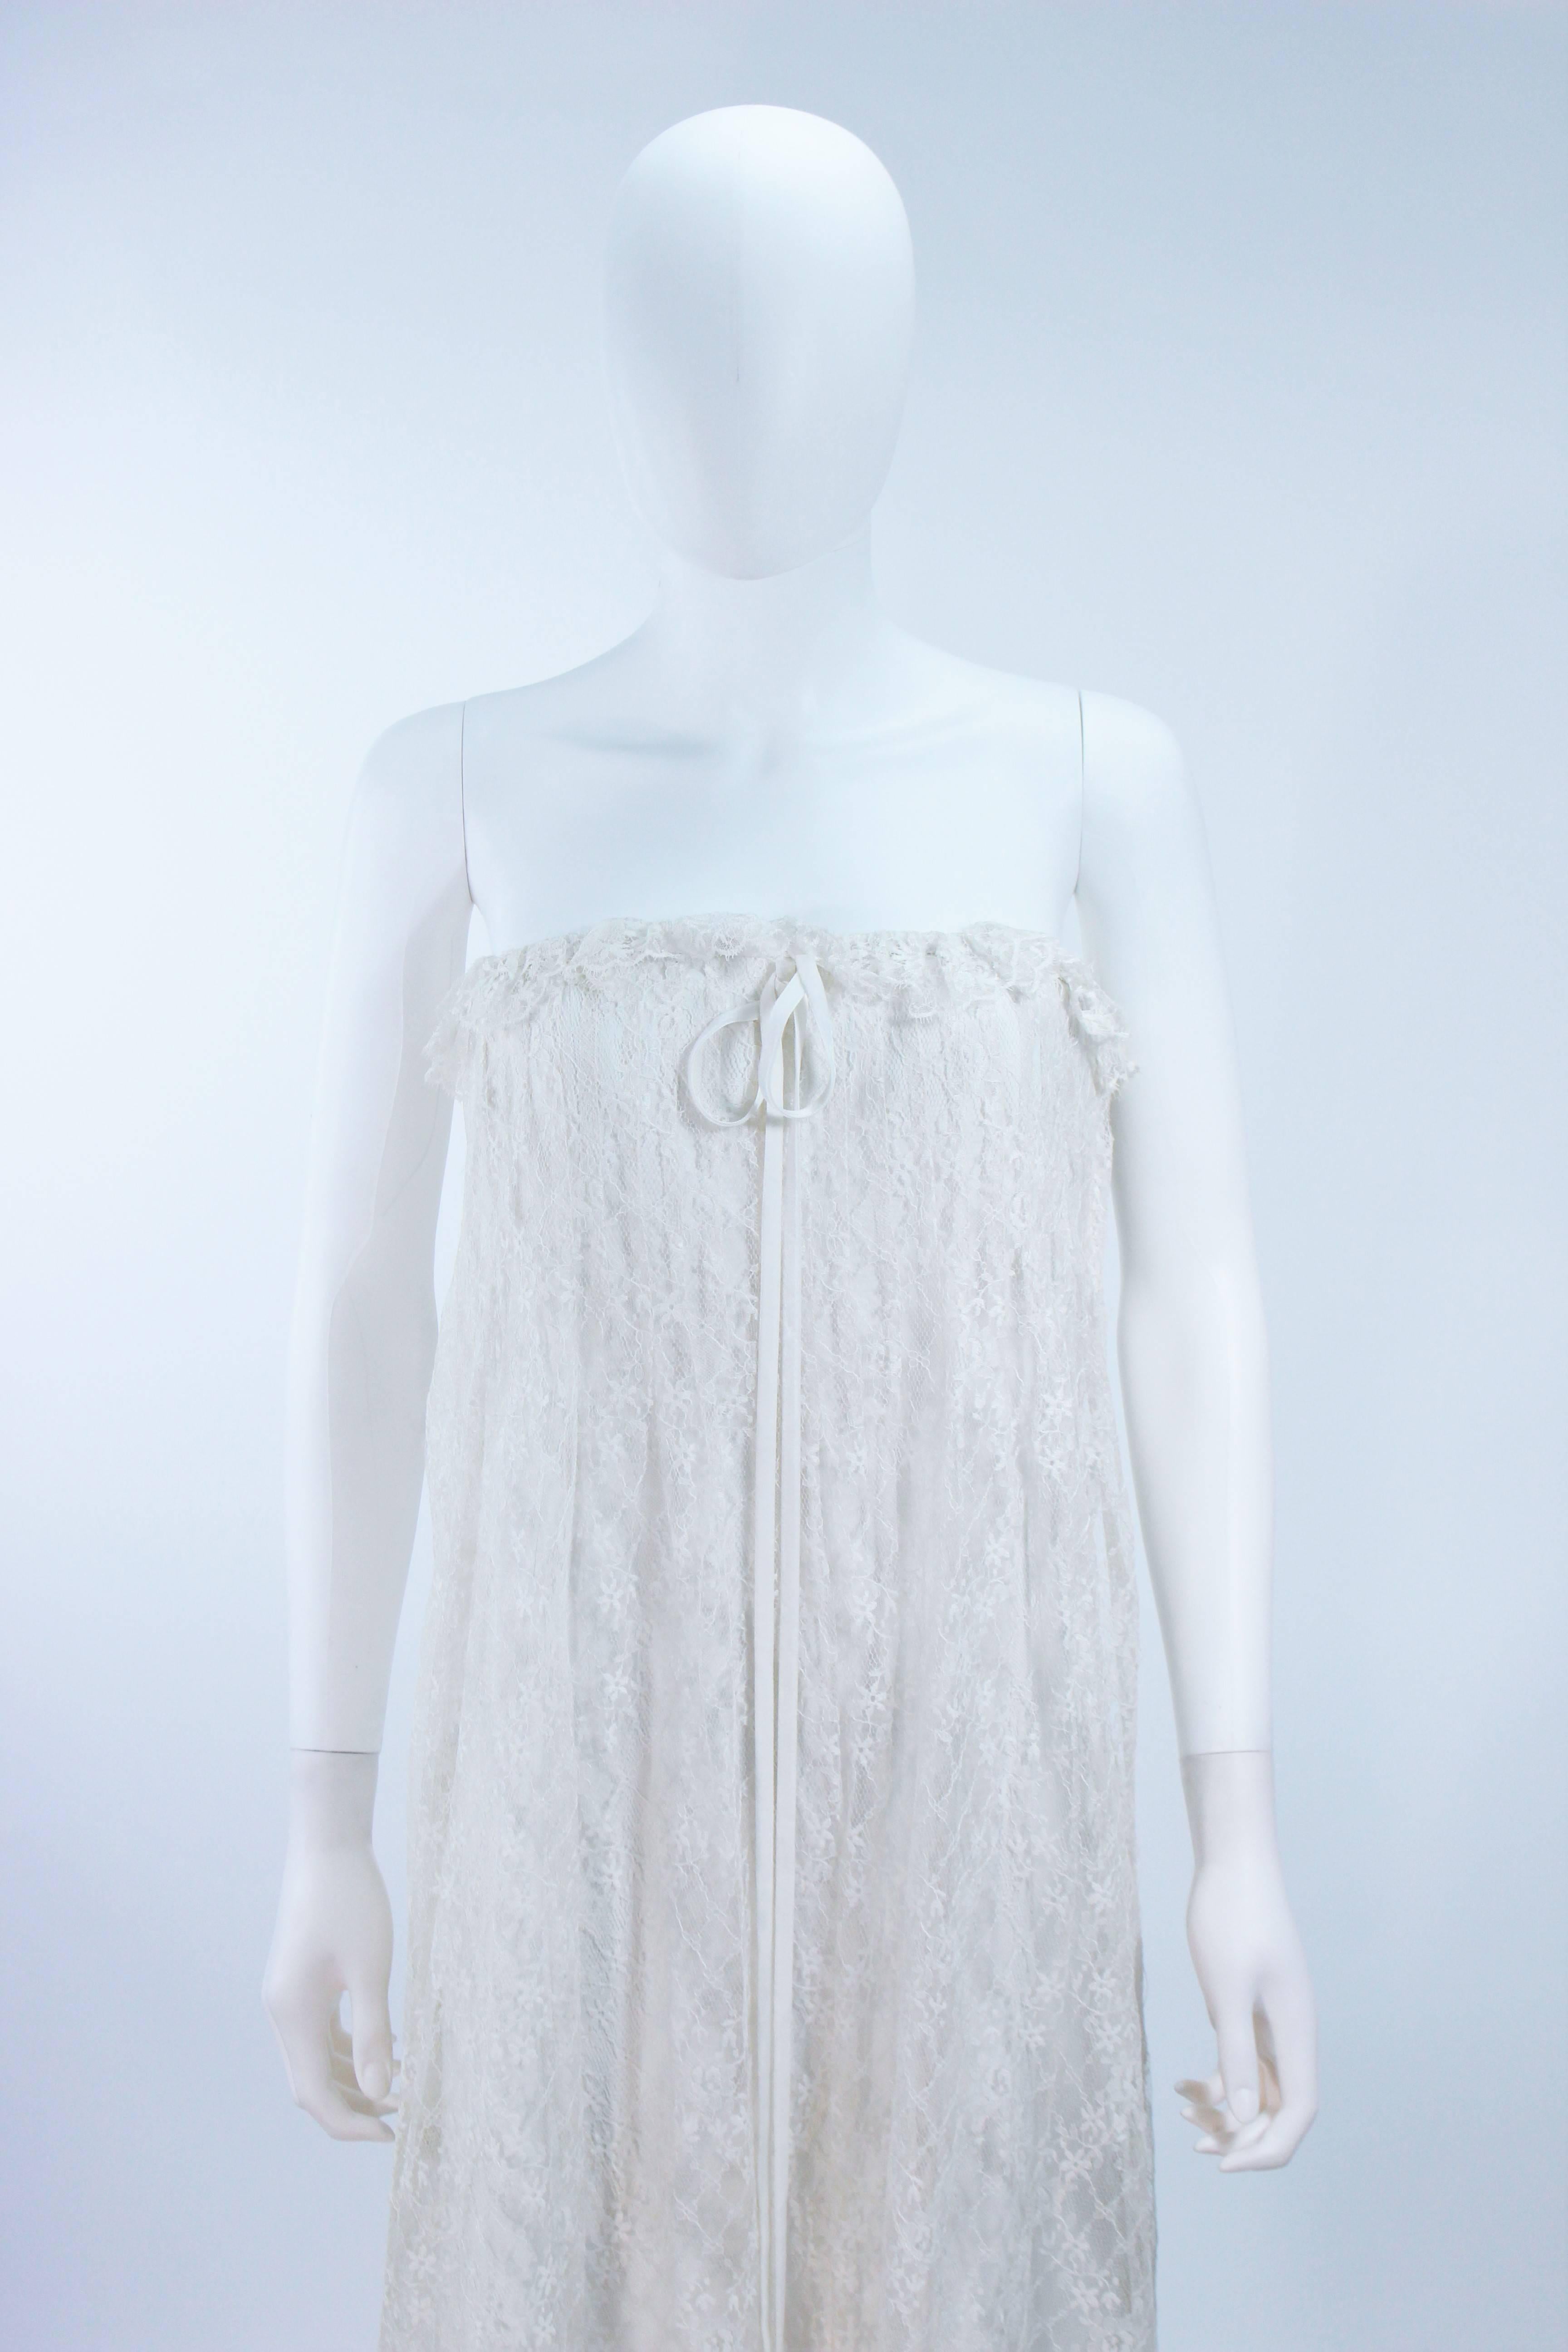 Gray BILL BLASS White Lace Strapless Dress Size 6